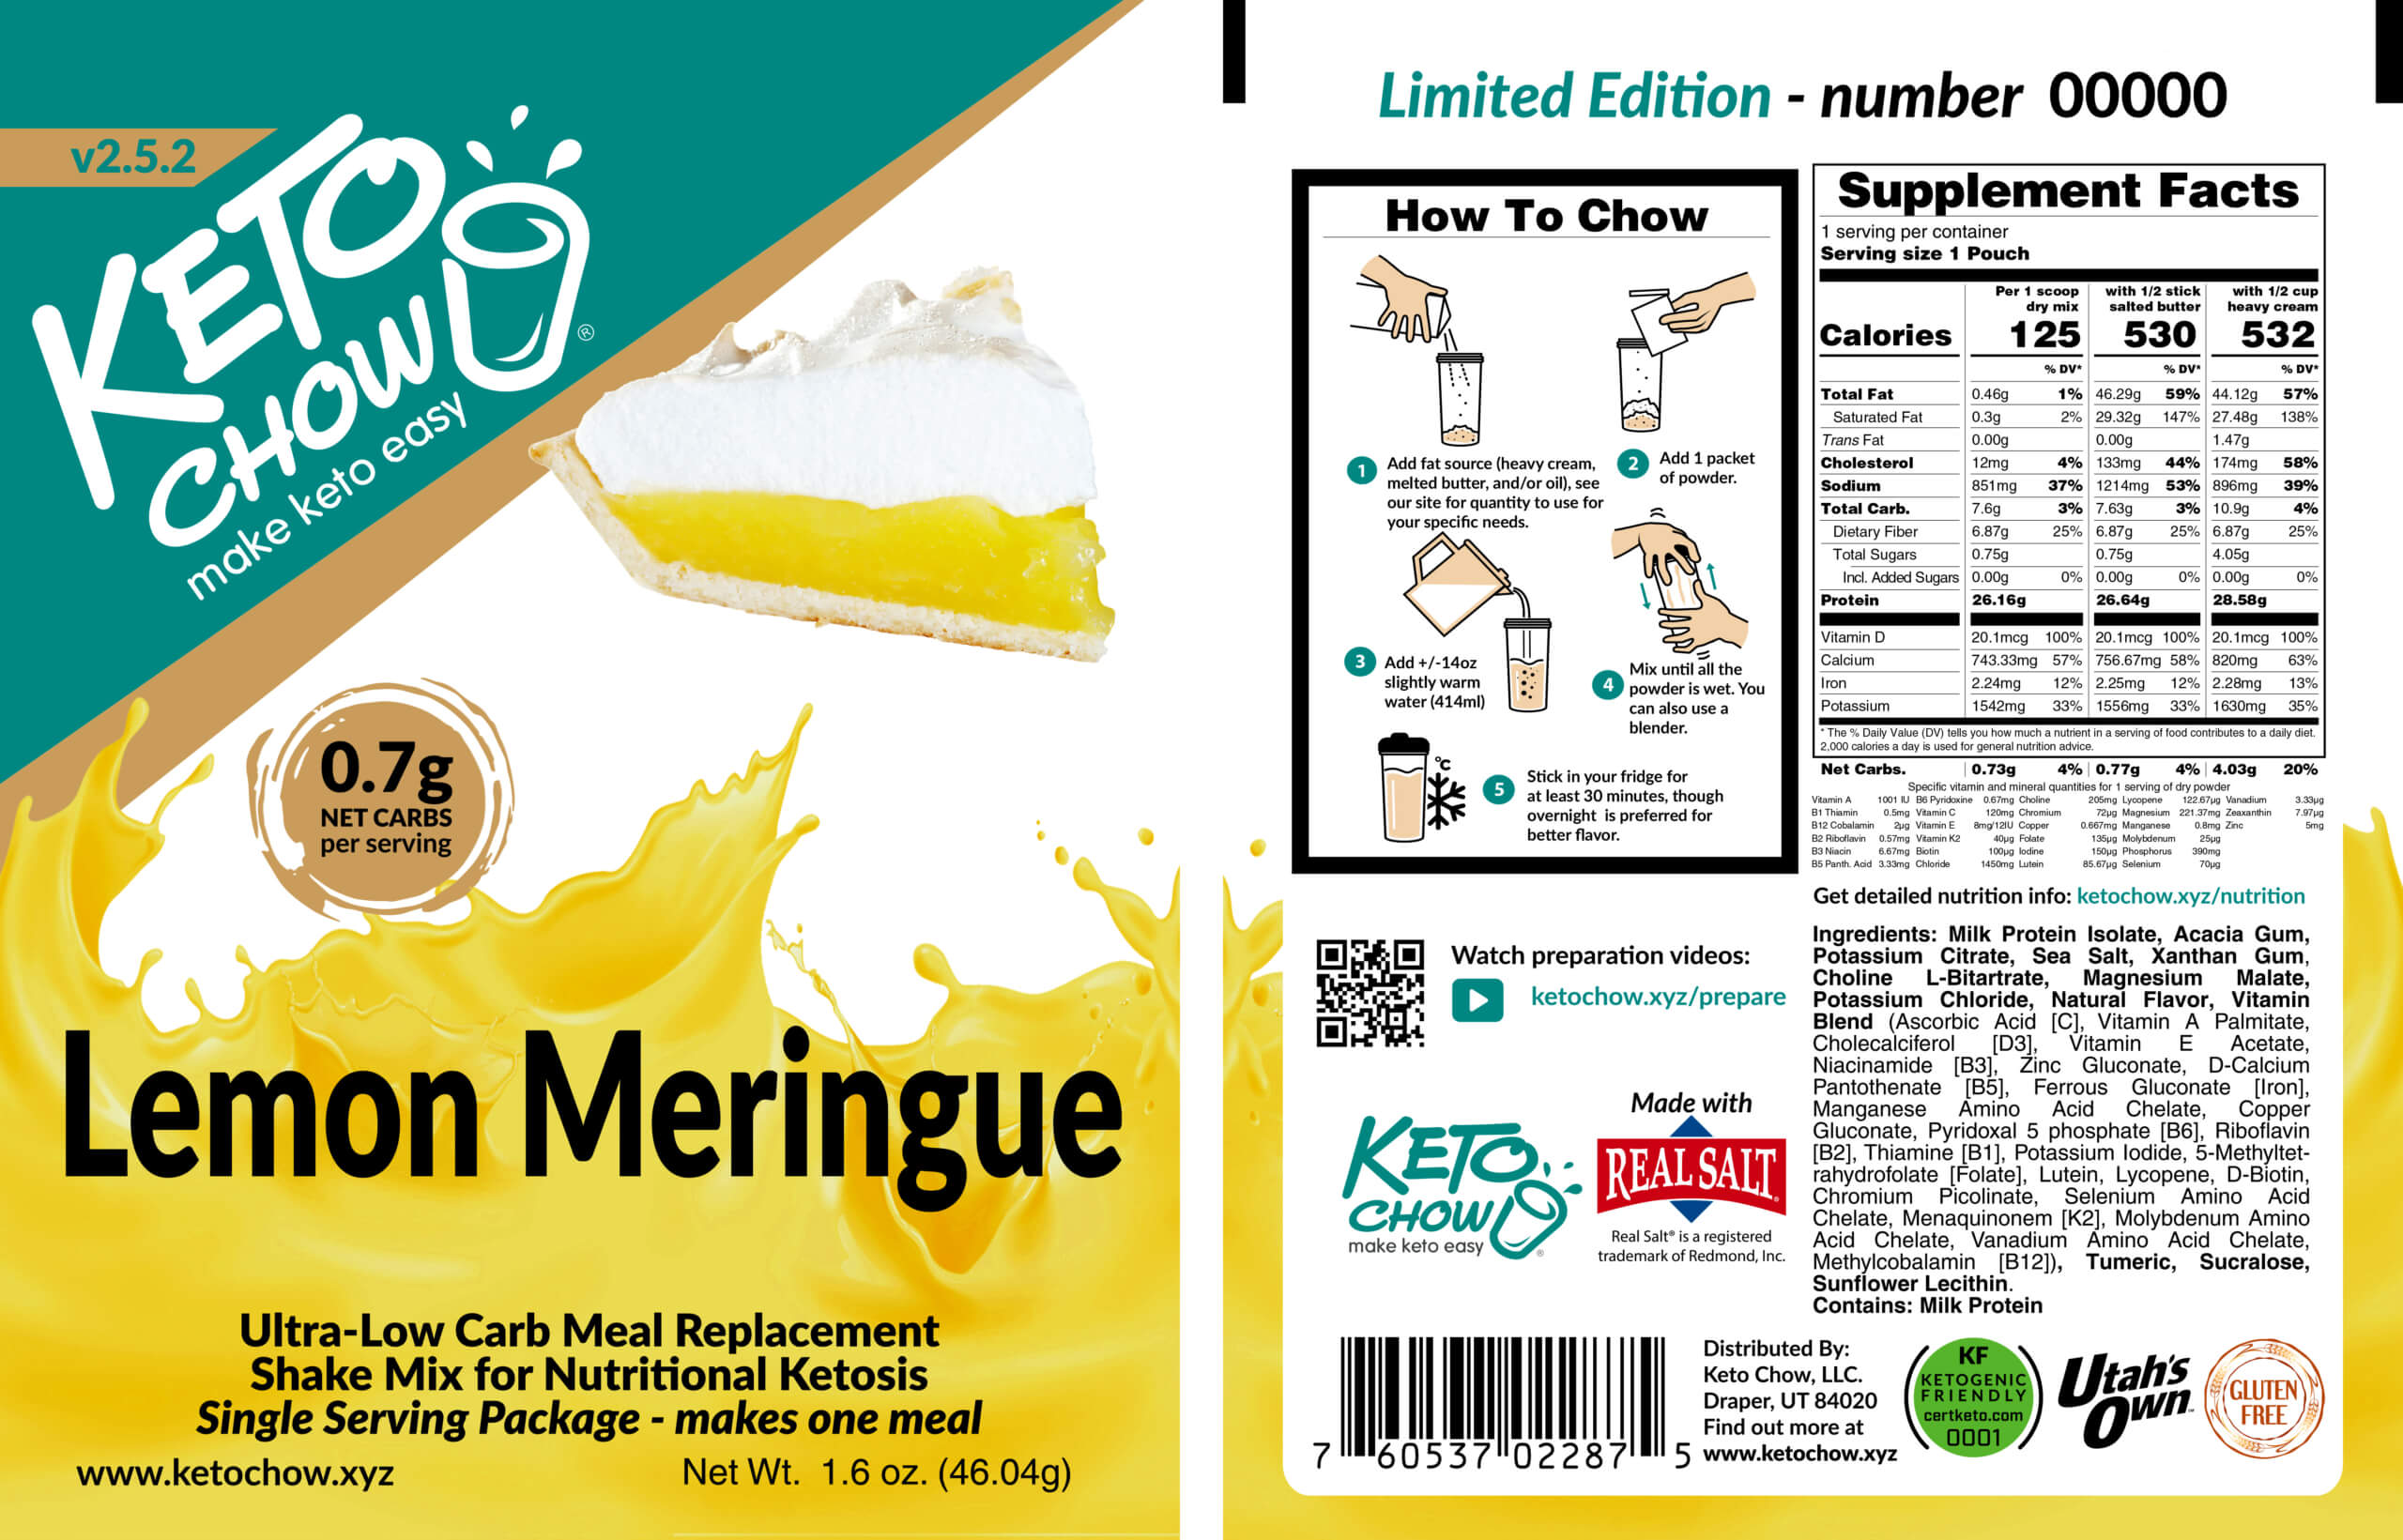 Lemon Meringue Sample